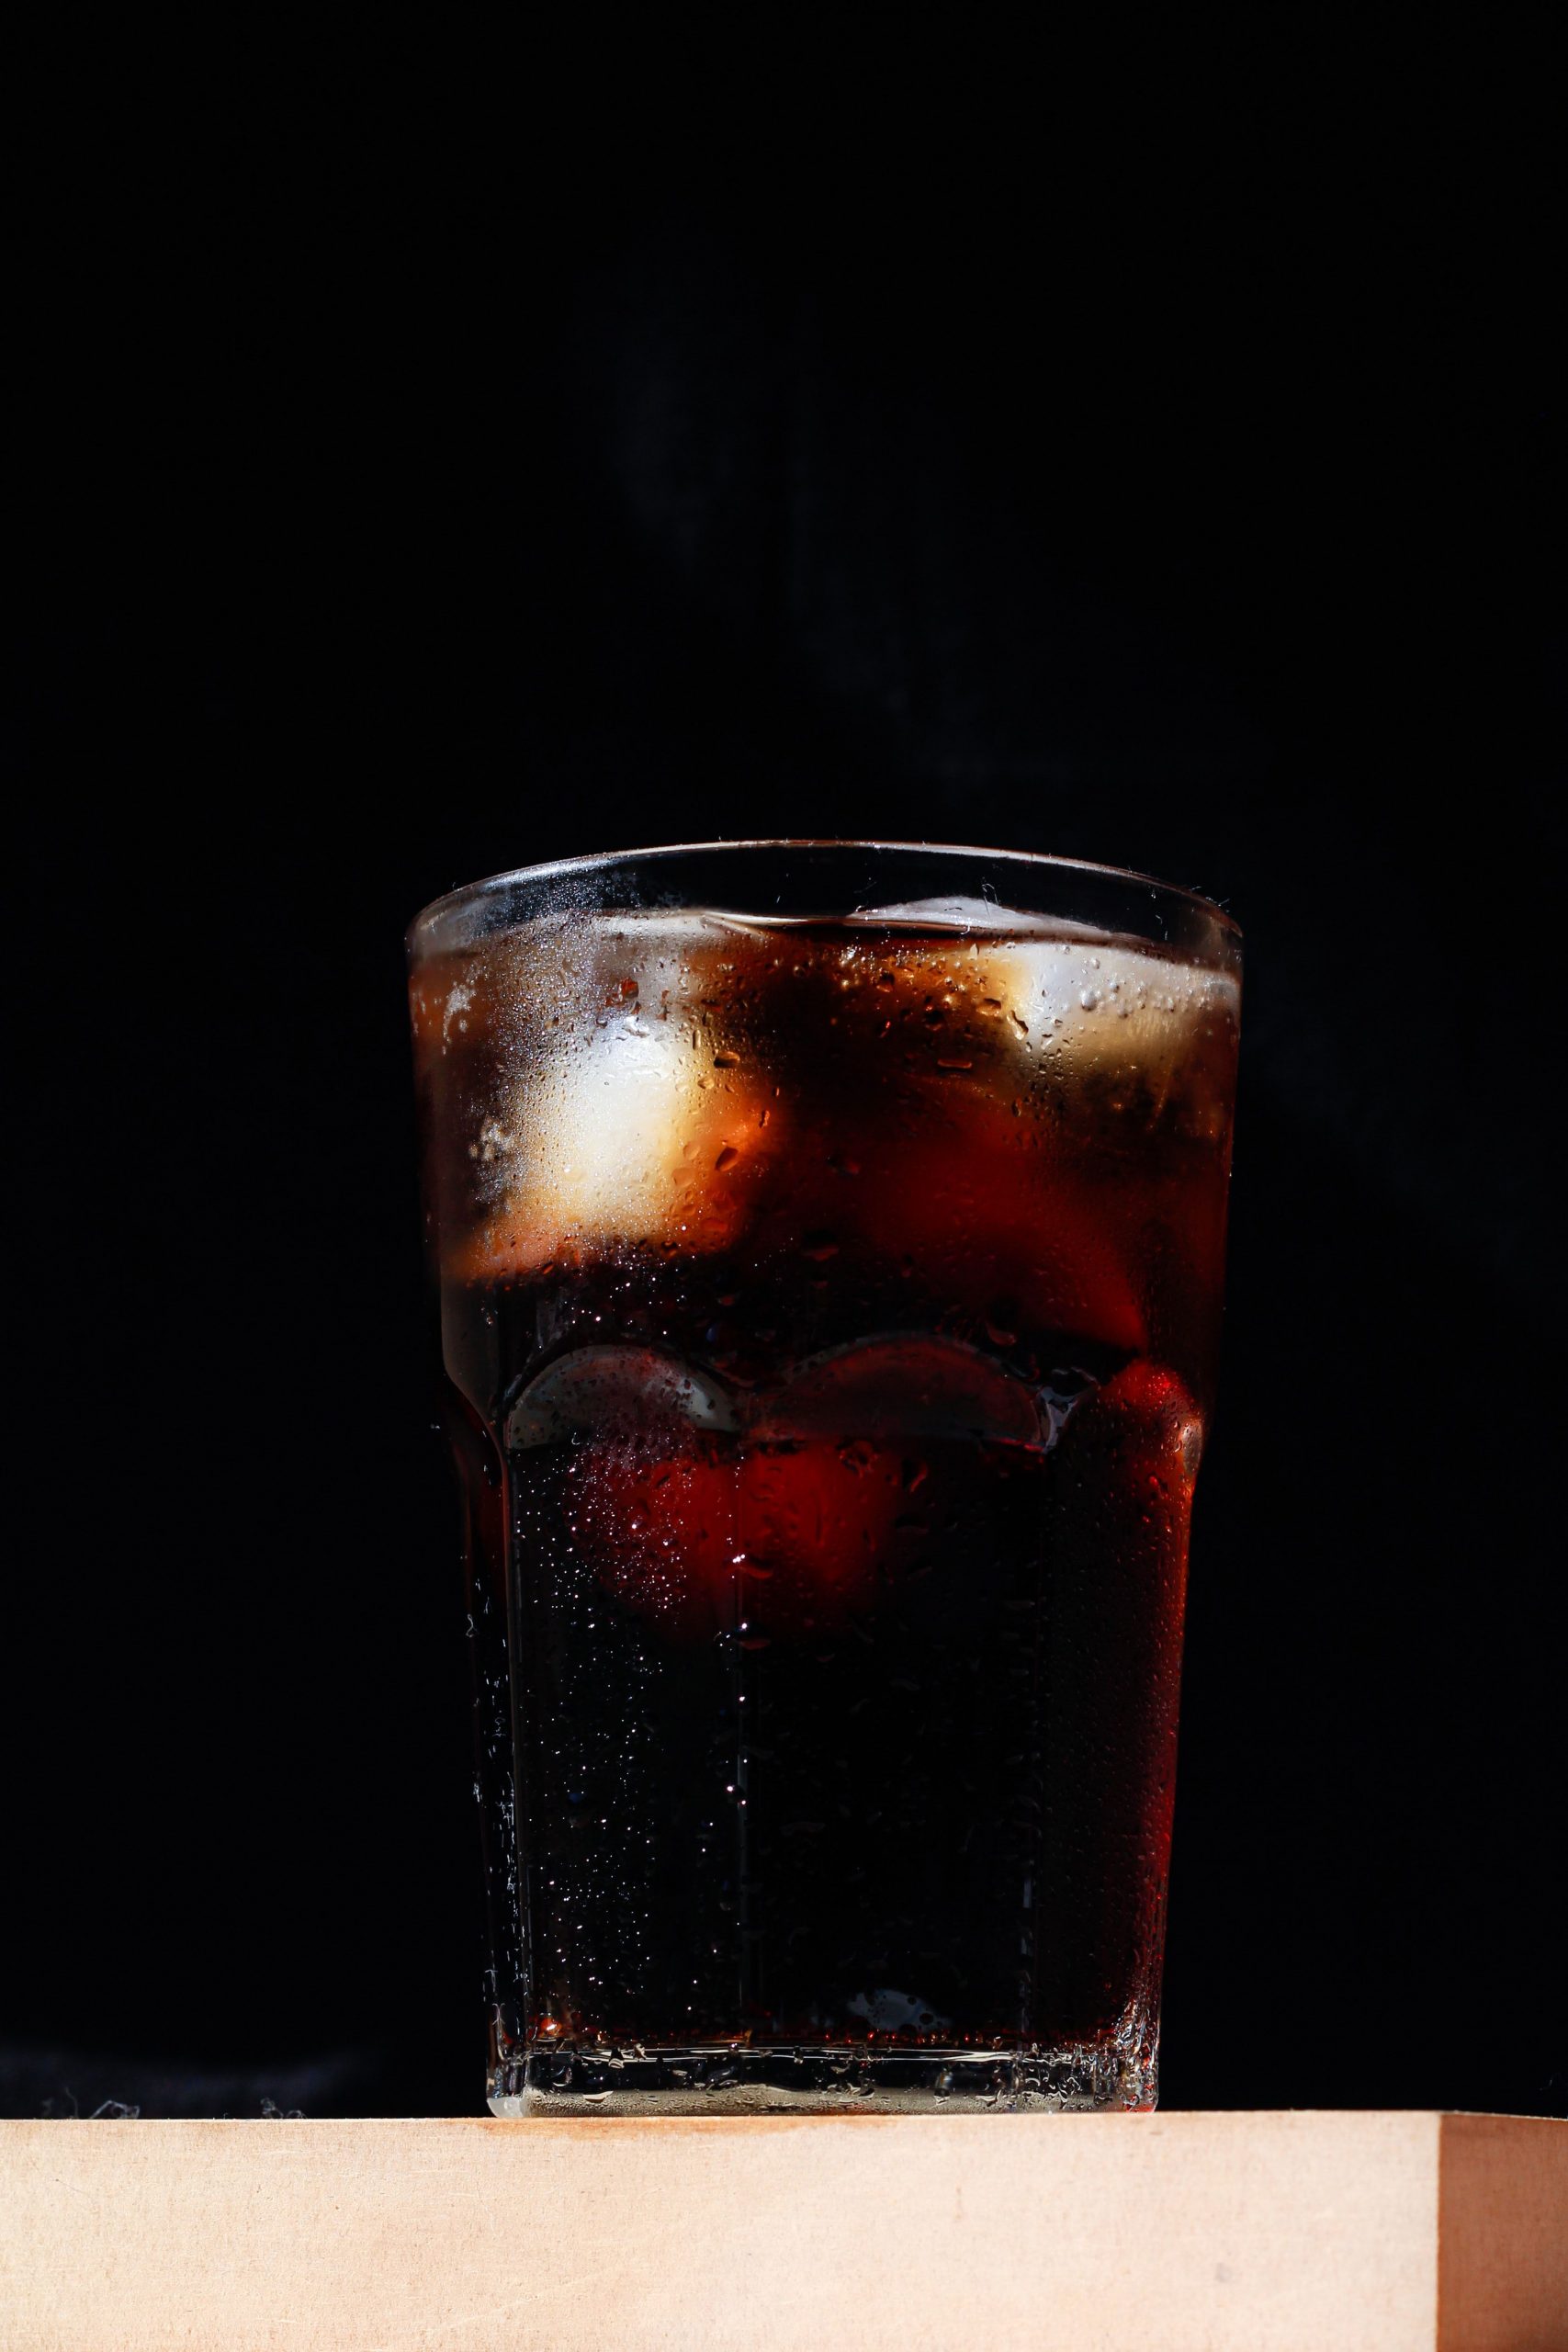 ‘Healthy Coke’: The latest viral TikTok trend